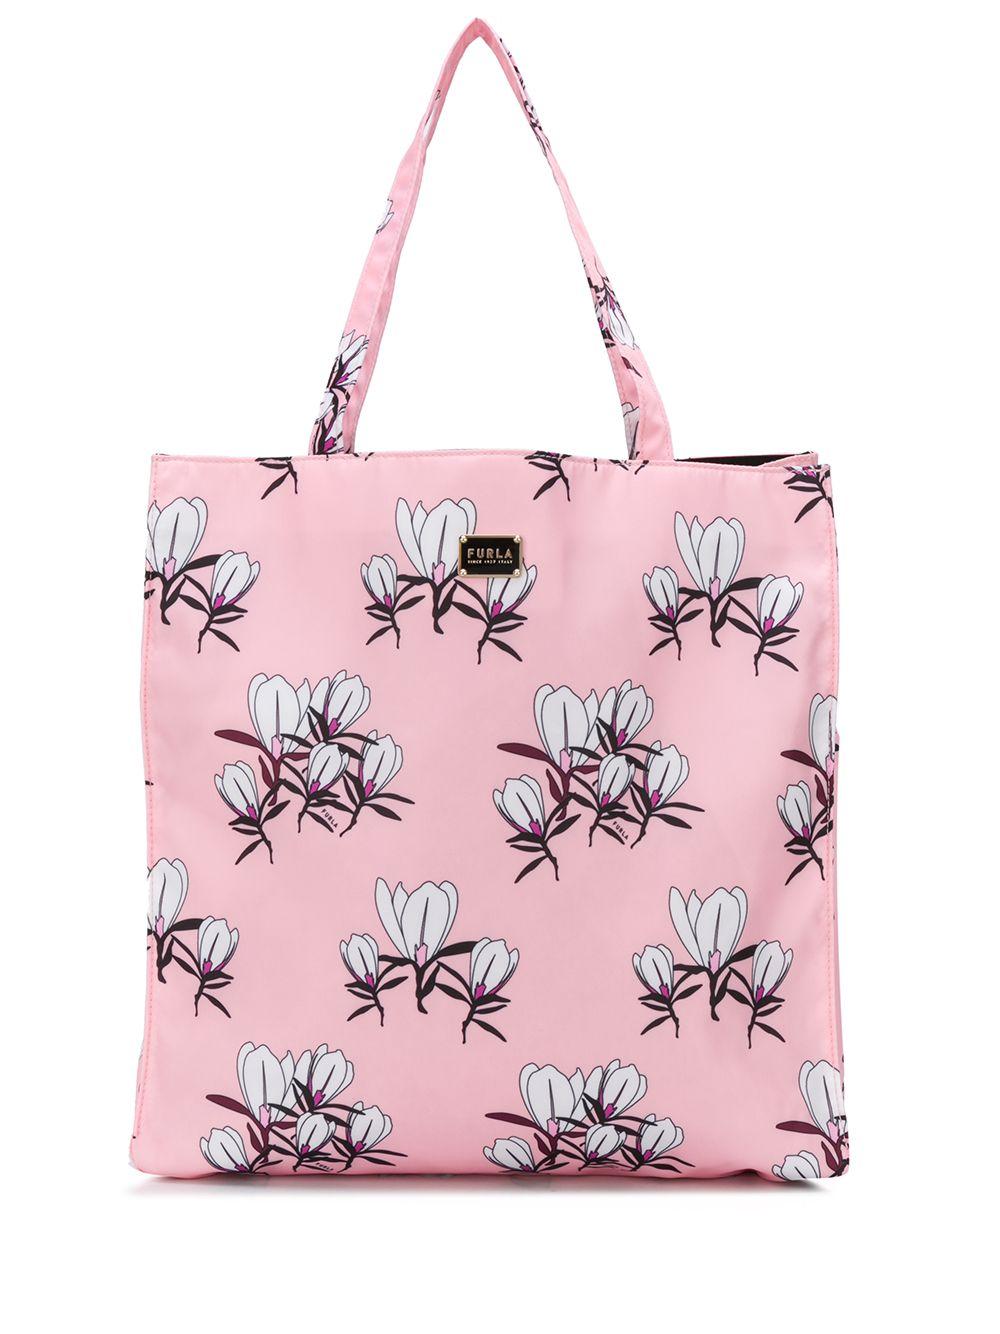 Furla Floral Tote Bag in Pink - Lyst